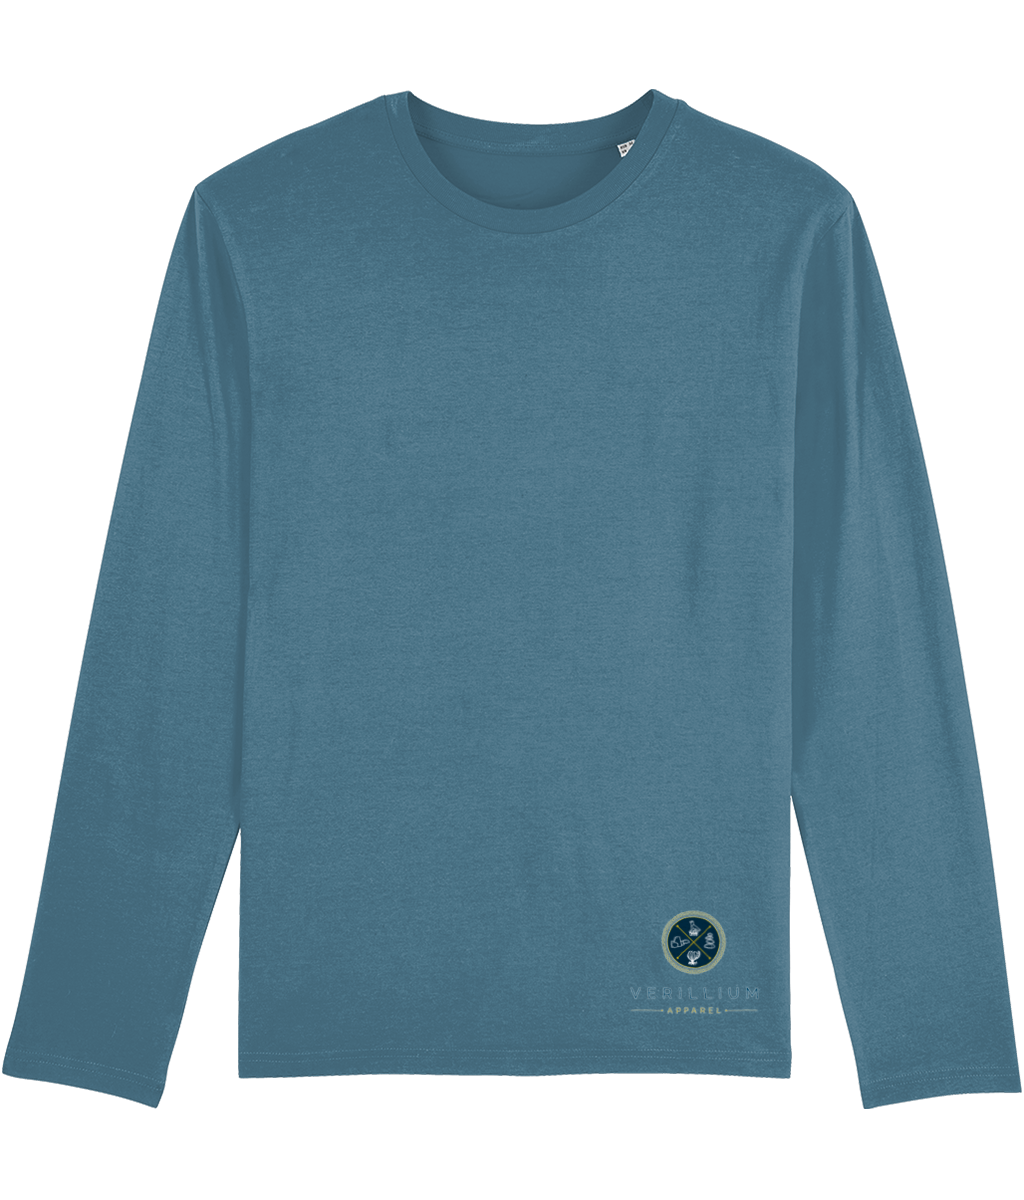 Men's Shuffler Long Sleeved T-shirt - Verillium Apparel